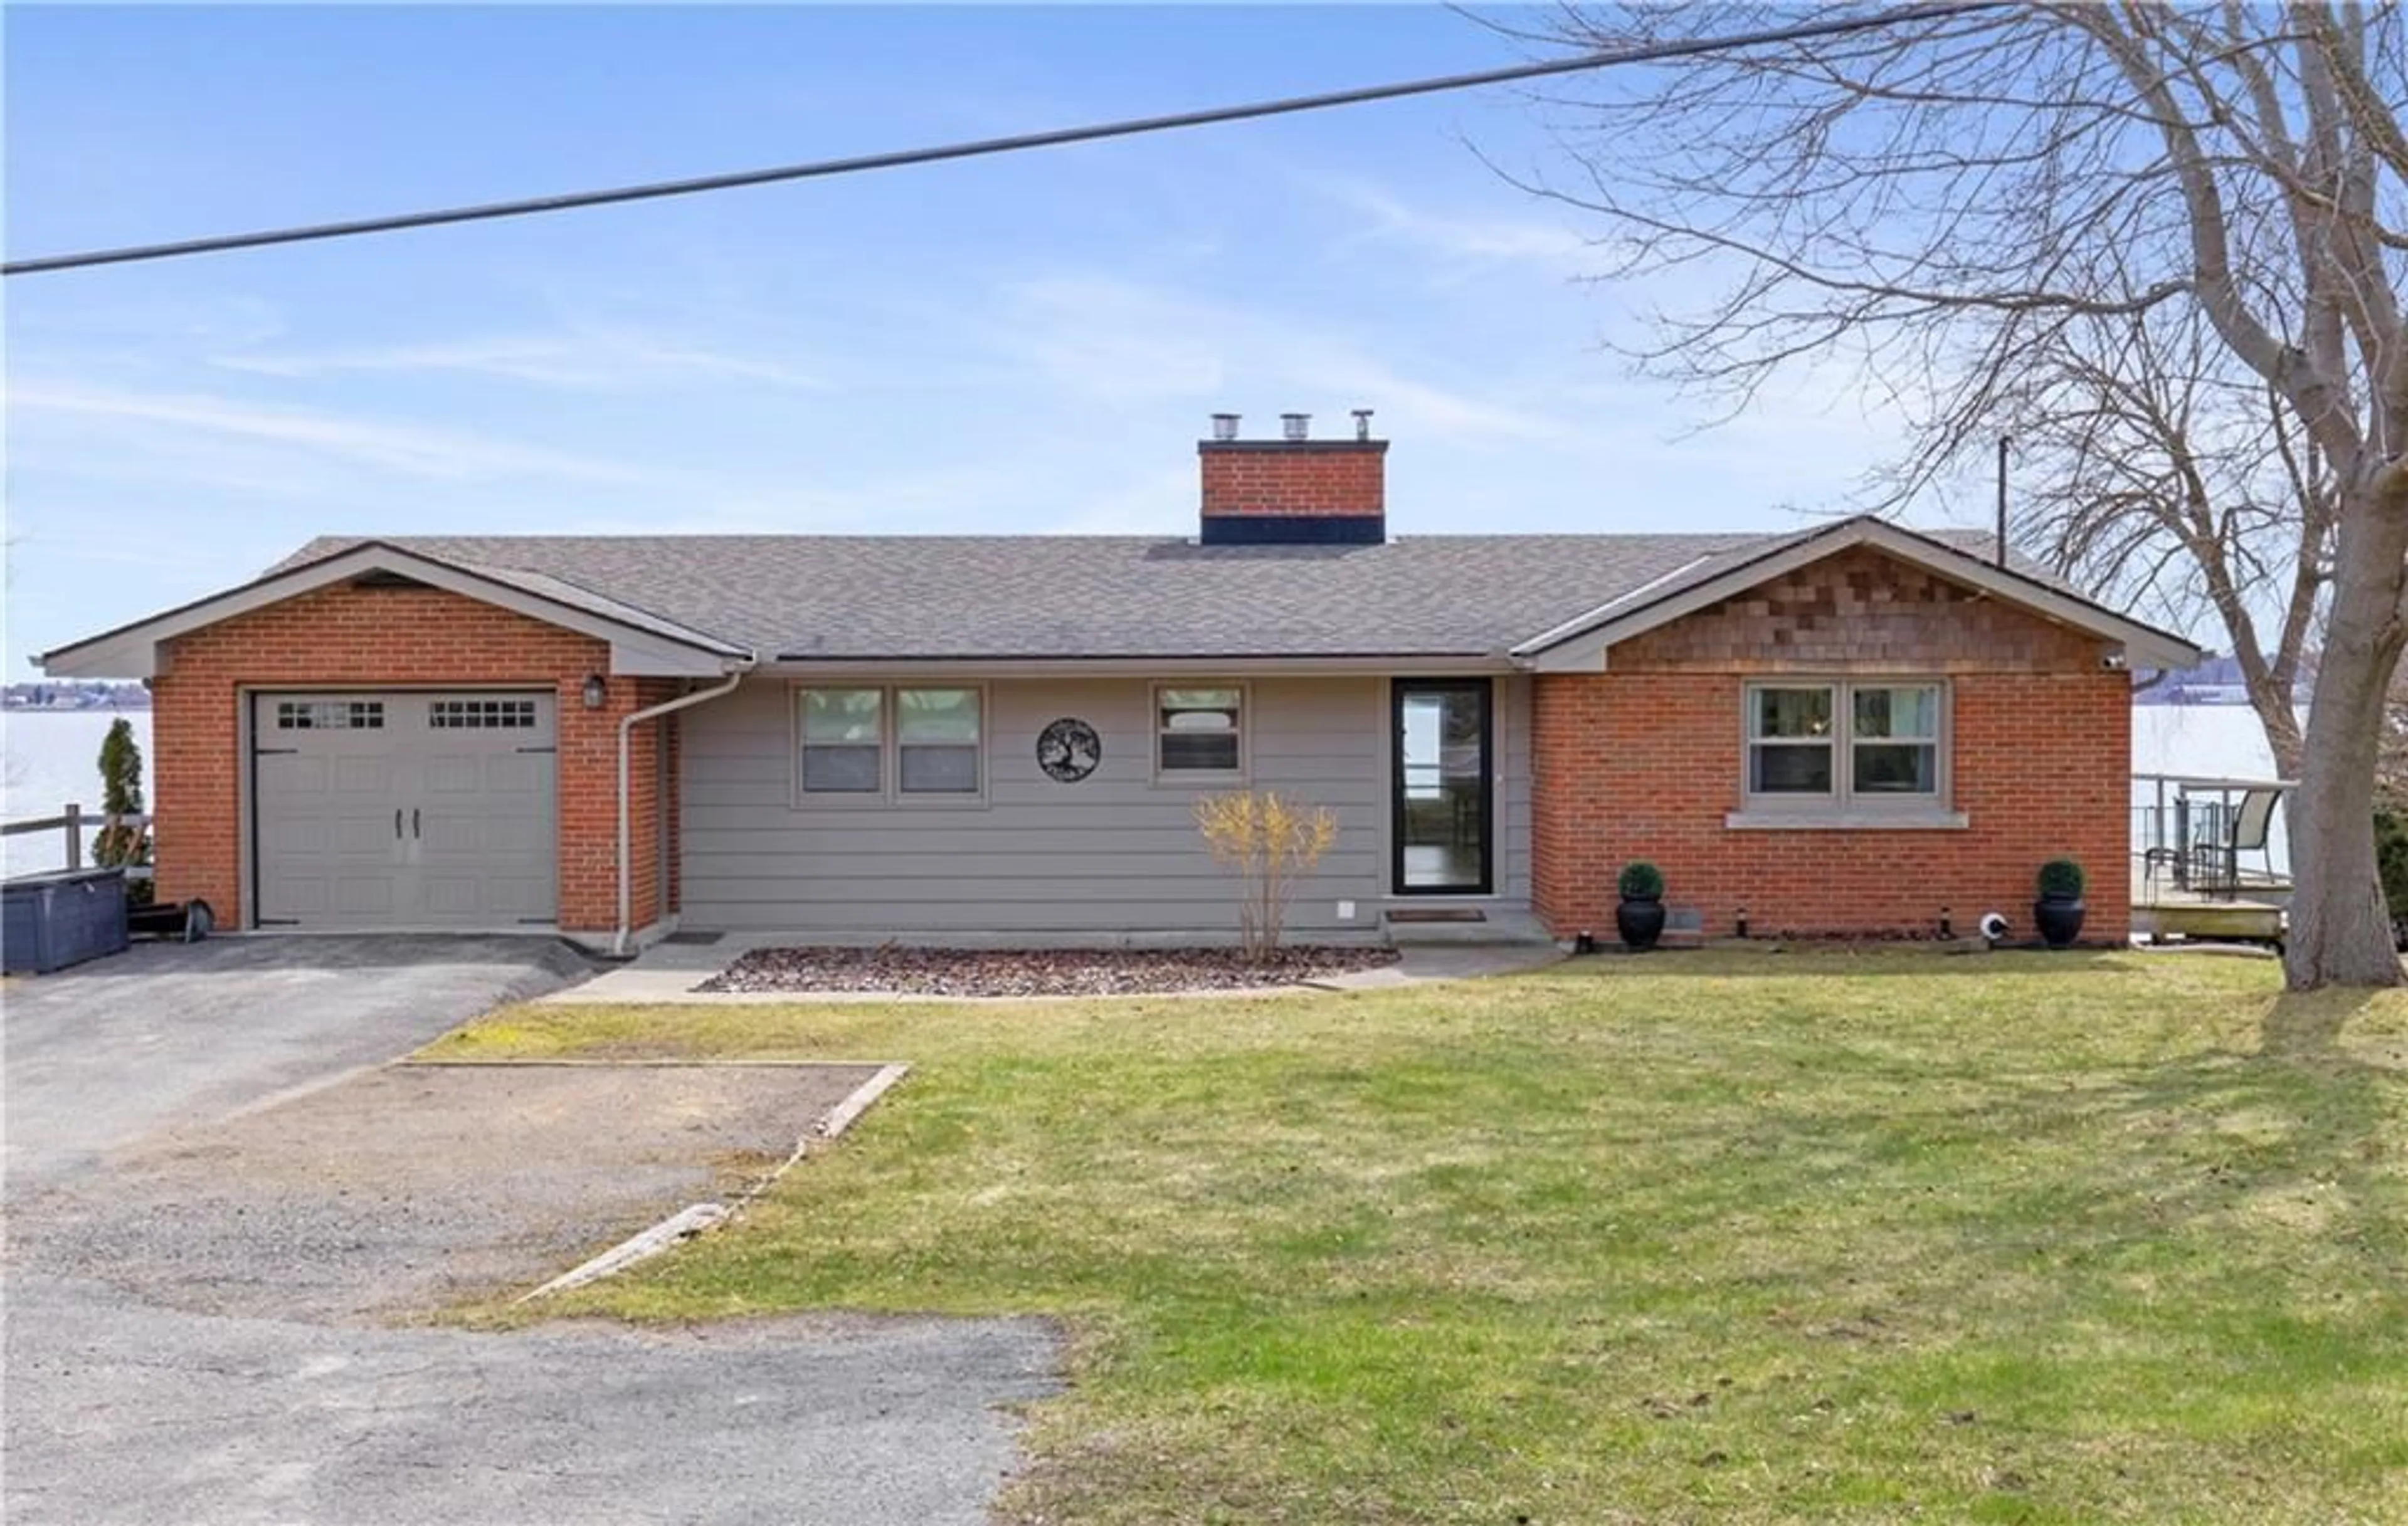 Home with brick exterior material for 1651 COUNTY ROAD 2 Rd, Prescott Ontario K0E 1T0